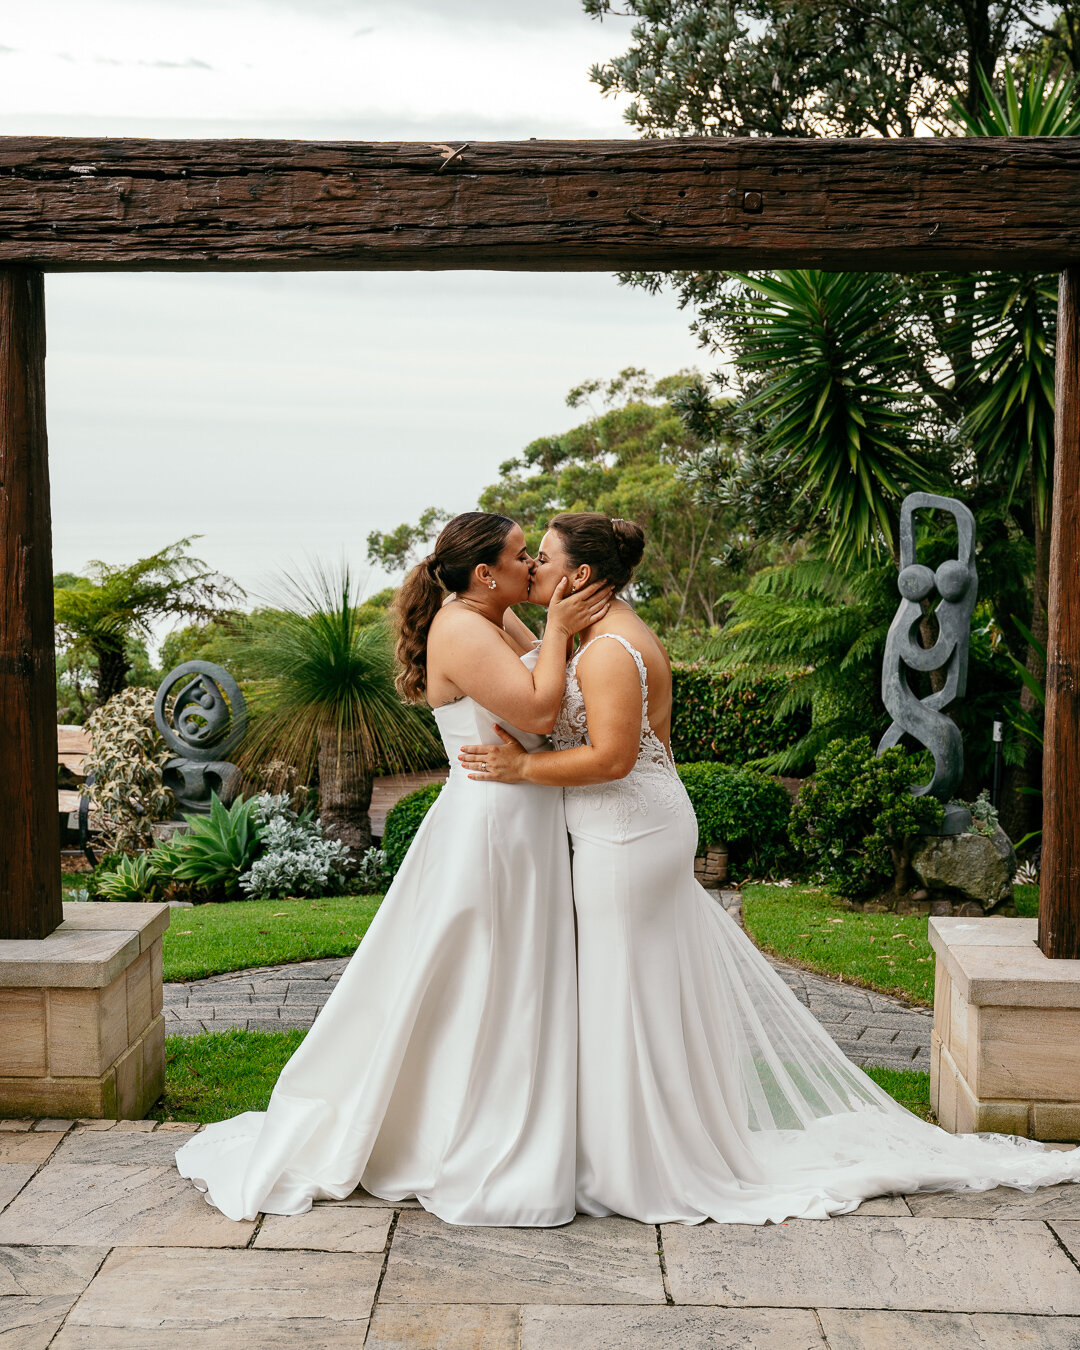 Two Beautiful Brides ❤️

...

@tumblingeatersretreat  @soulbrowstudio @erinshanley.hair @shonajoy  @marriedbymarie  @xydj  @mariaelaineartistry  #tumblingwatersretreat #tumblingwatersweddings #tumblingwatersretreatwedding #tumblingwatersretreatweddin